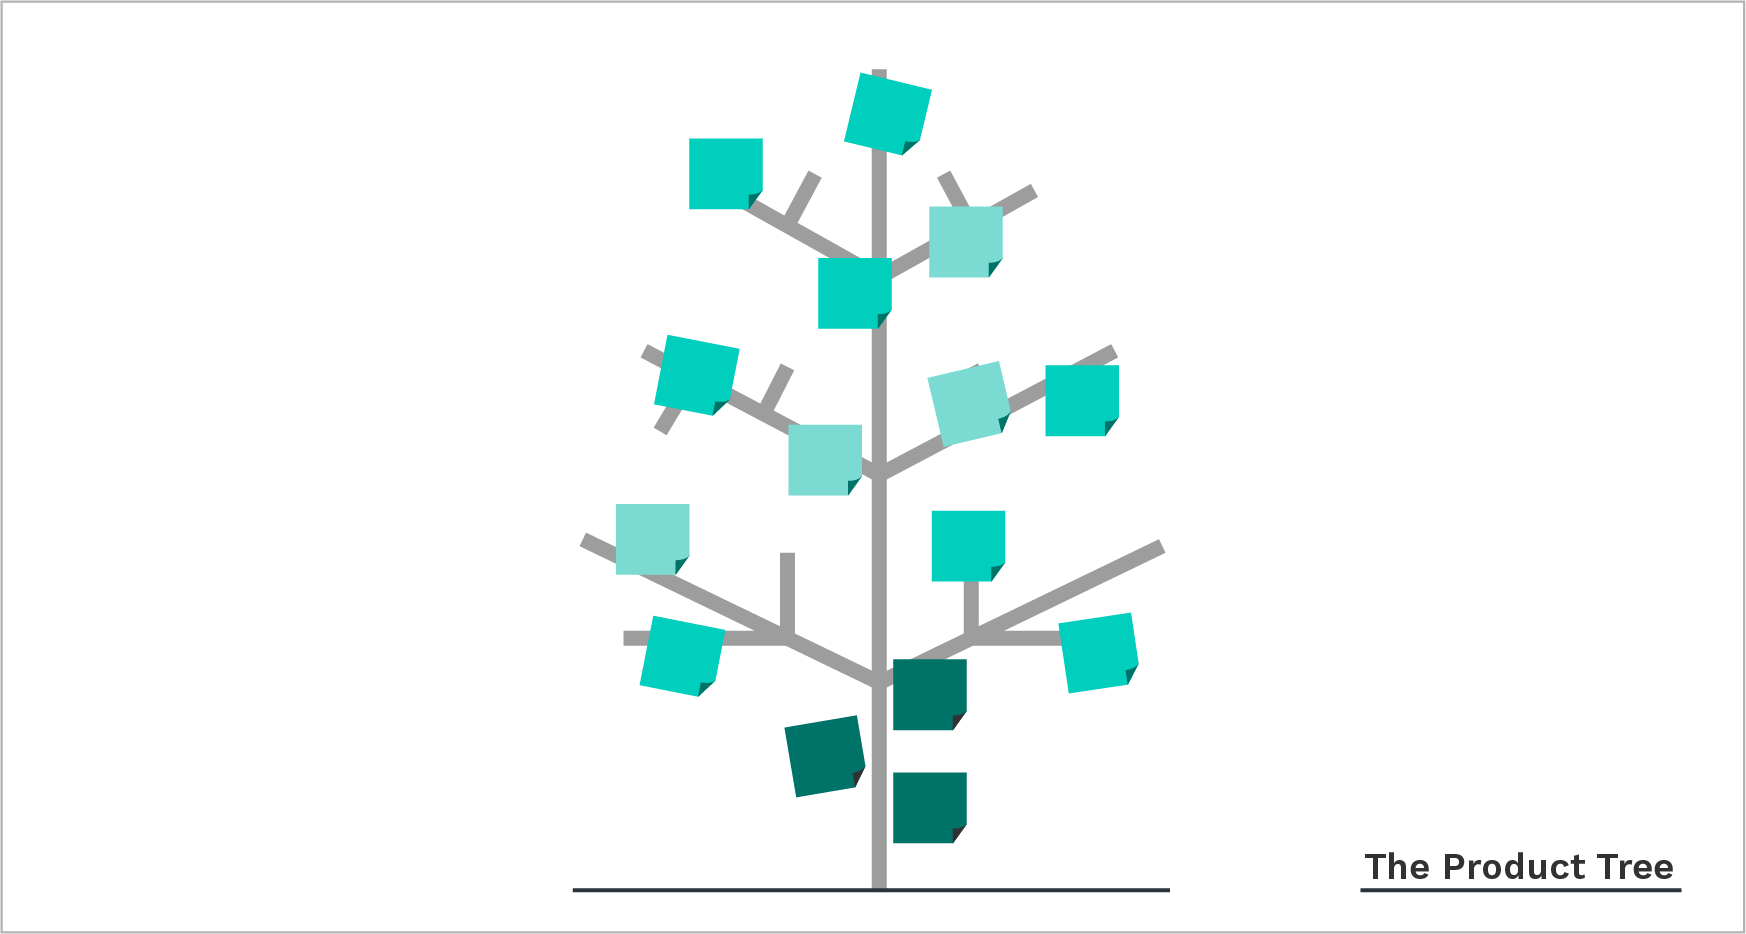 product tree - product prioritization framework